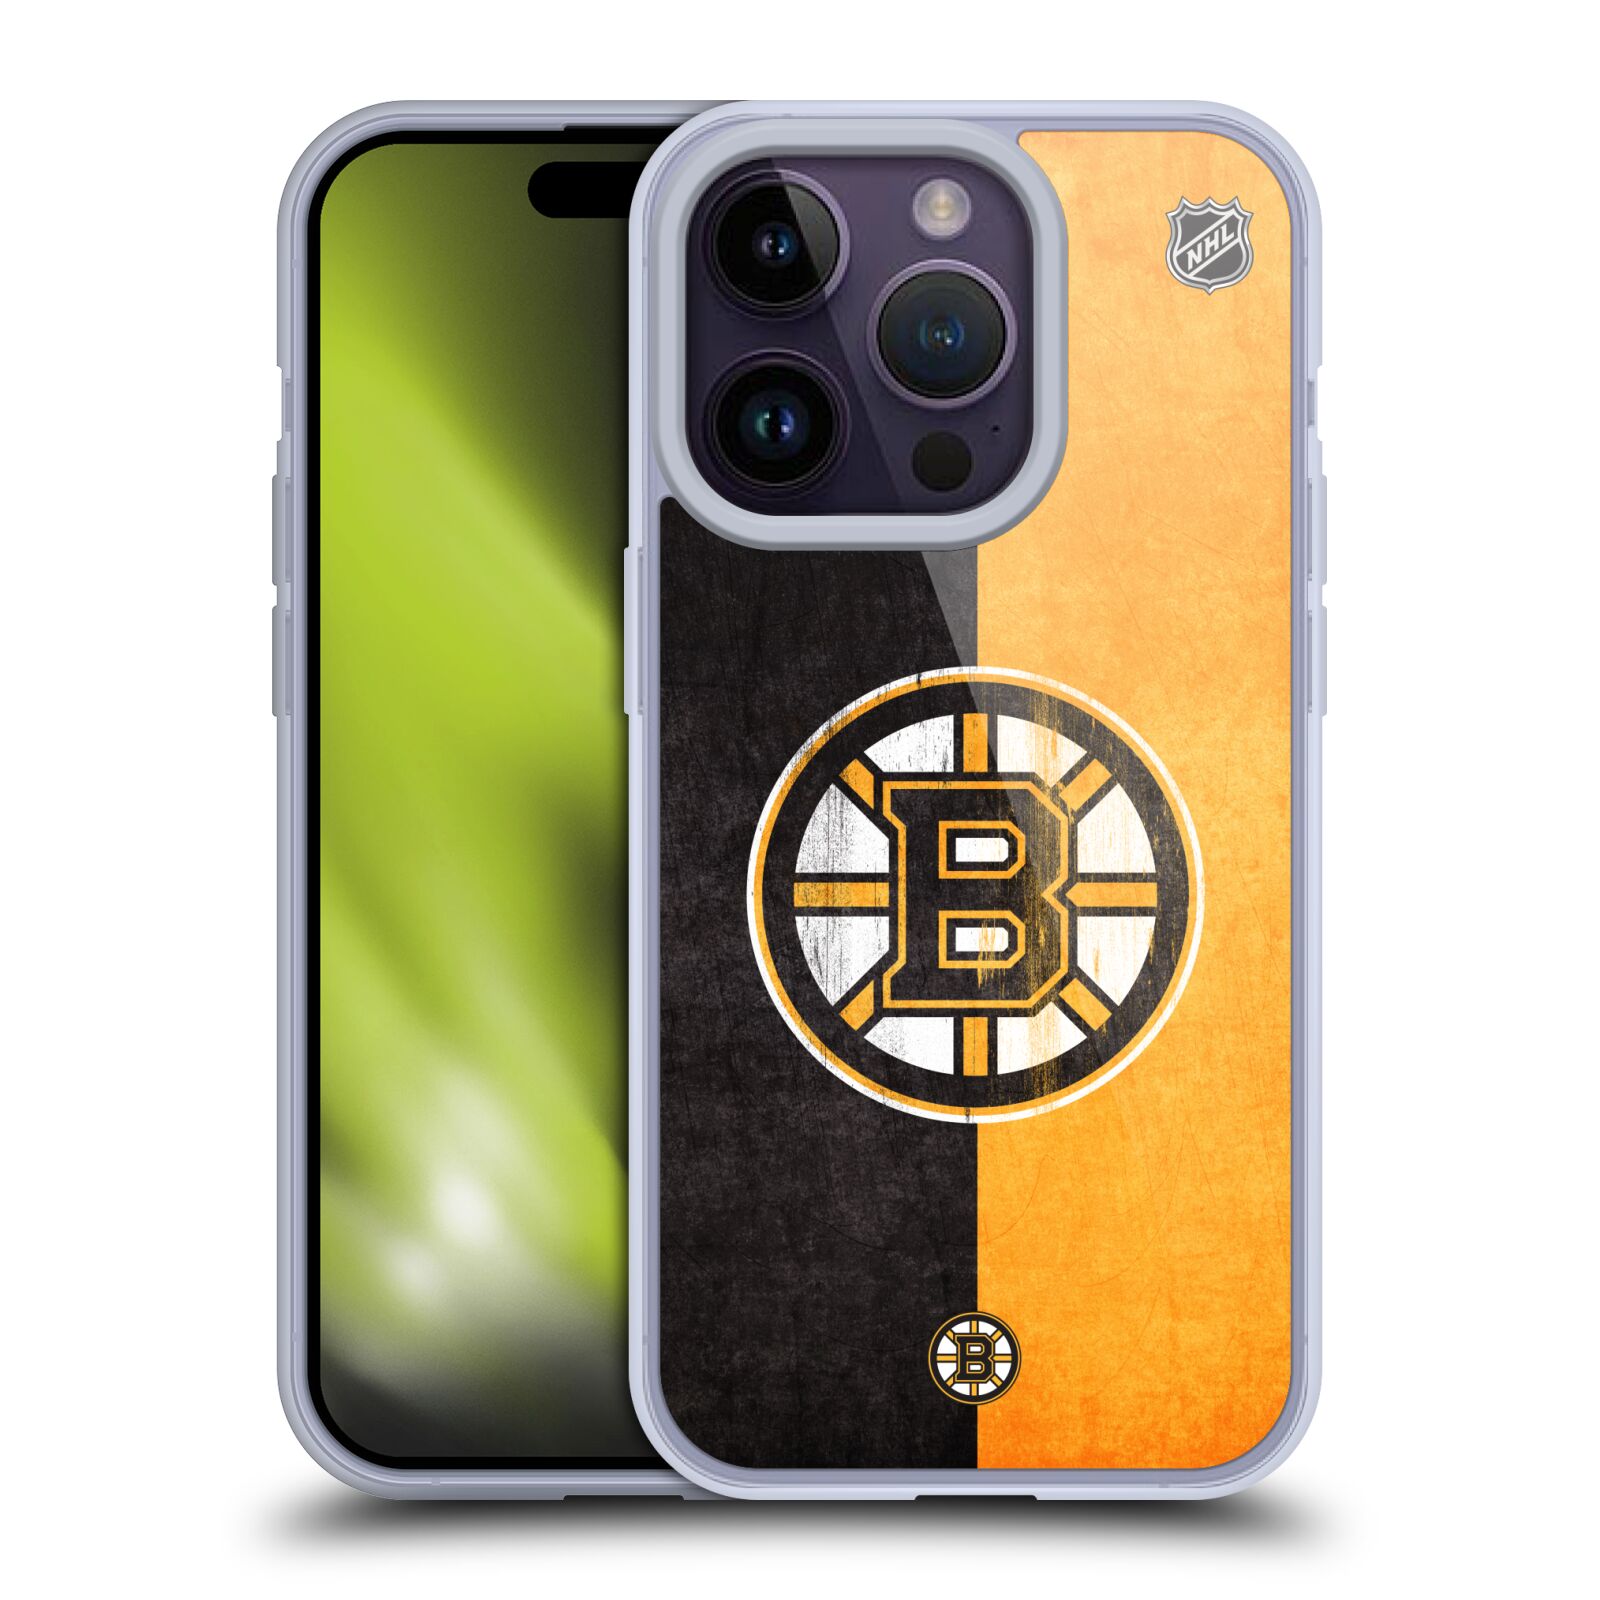 Silikonové pouzdro na mobil Apple iPhone 14 Pro - NHL - Půlené logo Boston Bruins (Silikonový kryt, obal, pouzdro na mobilní telefon Apple iPhone 14 Pro s licencovaným motivem NHL - Půlené logo Boston Bruins)